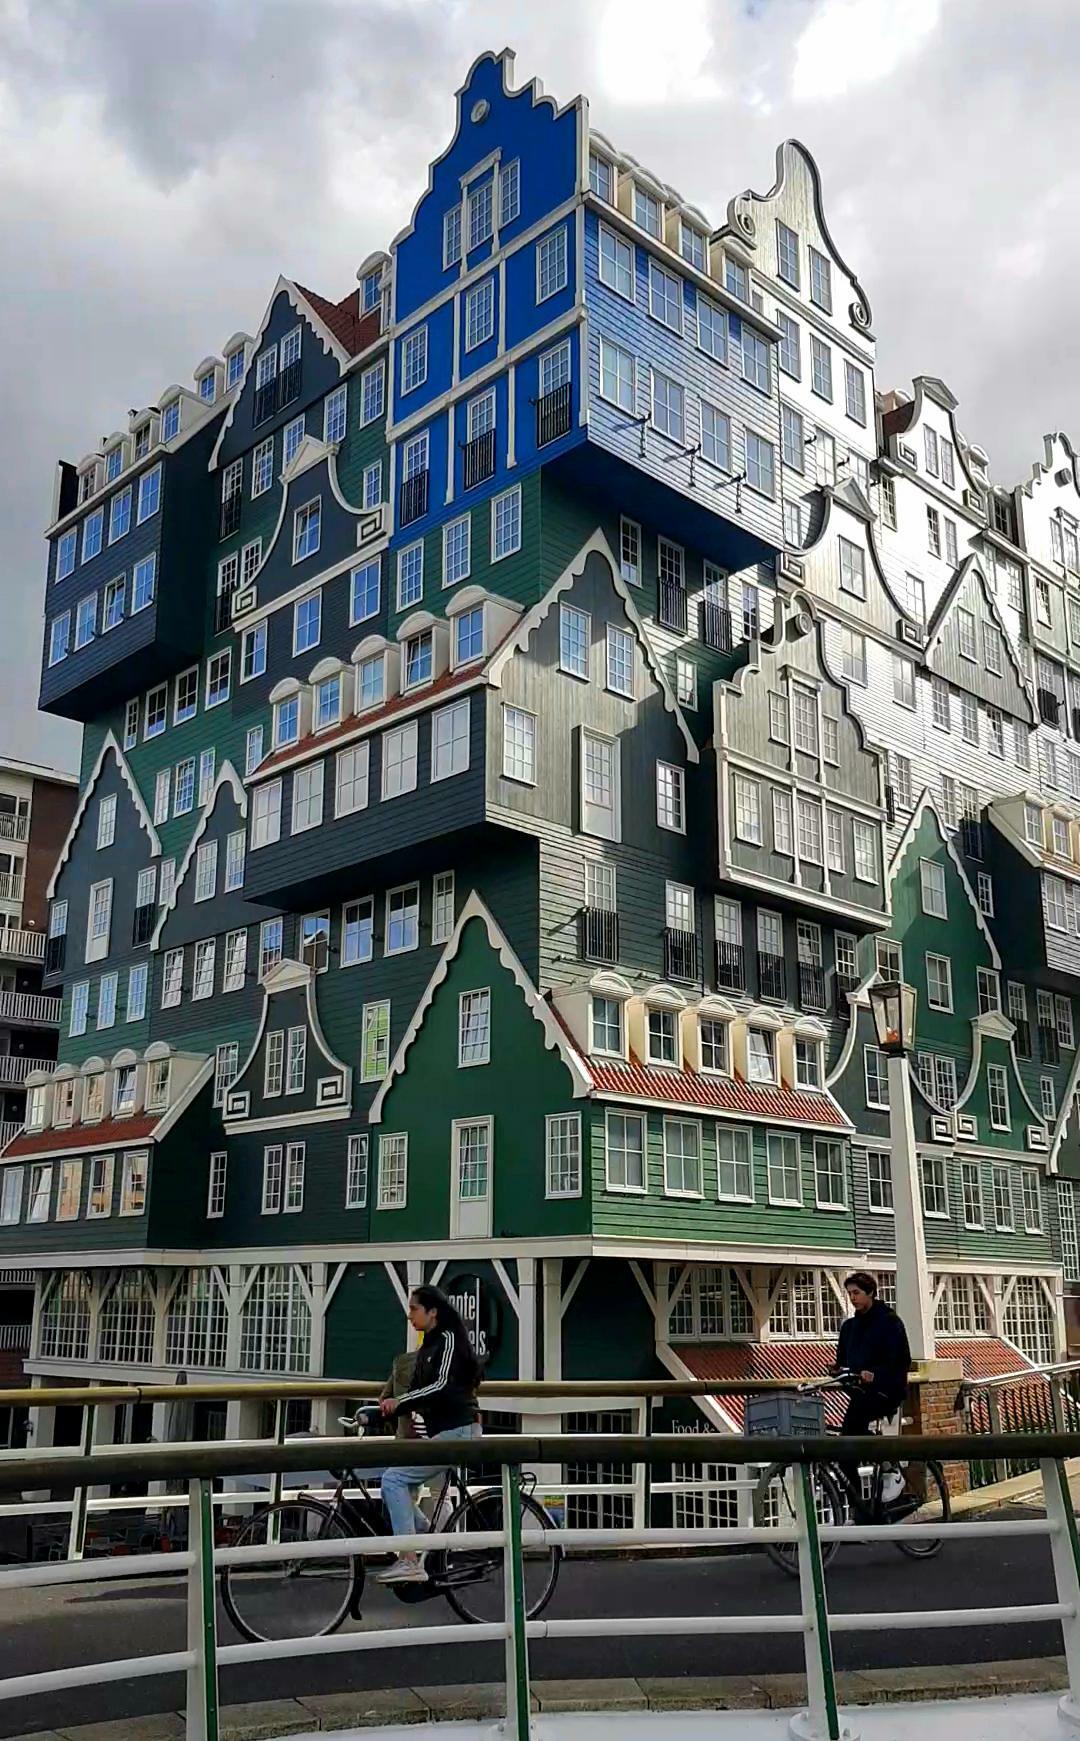 Stacked Hotel In Zaandam, The Netherlands